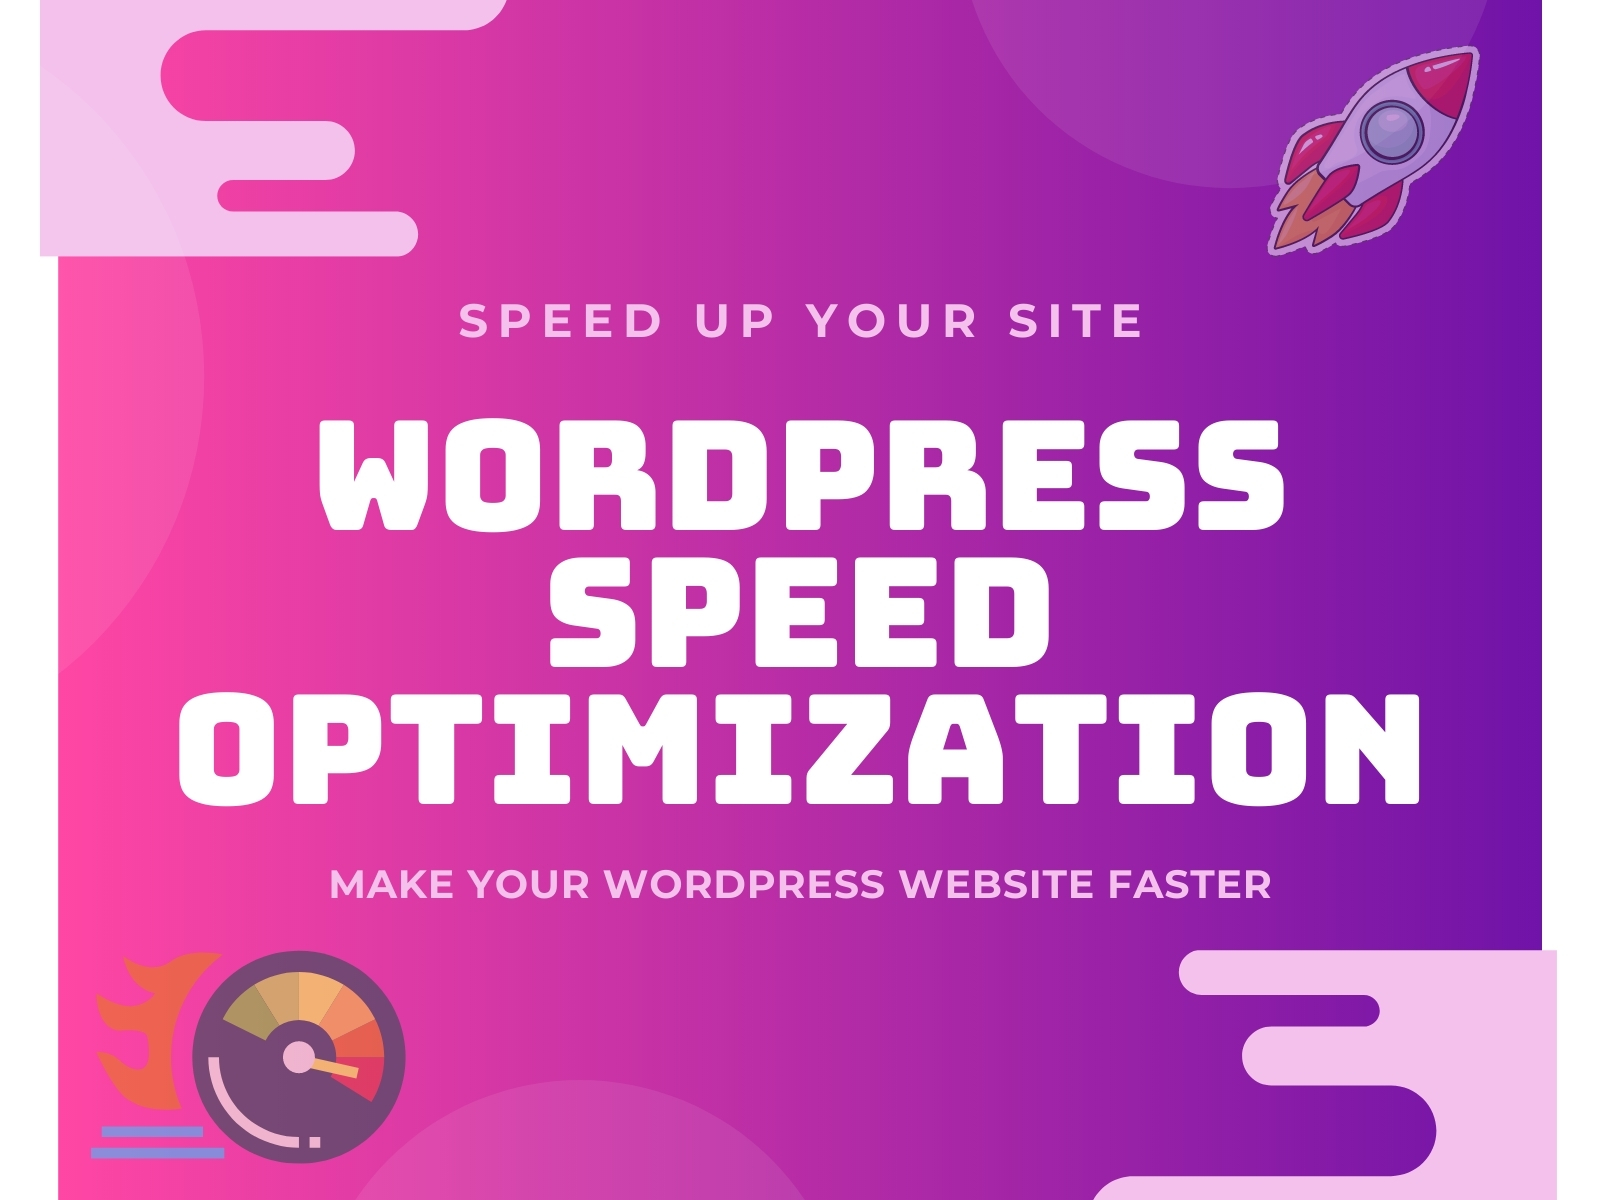 I will do speed optimization of WordPress site